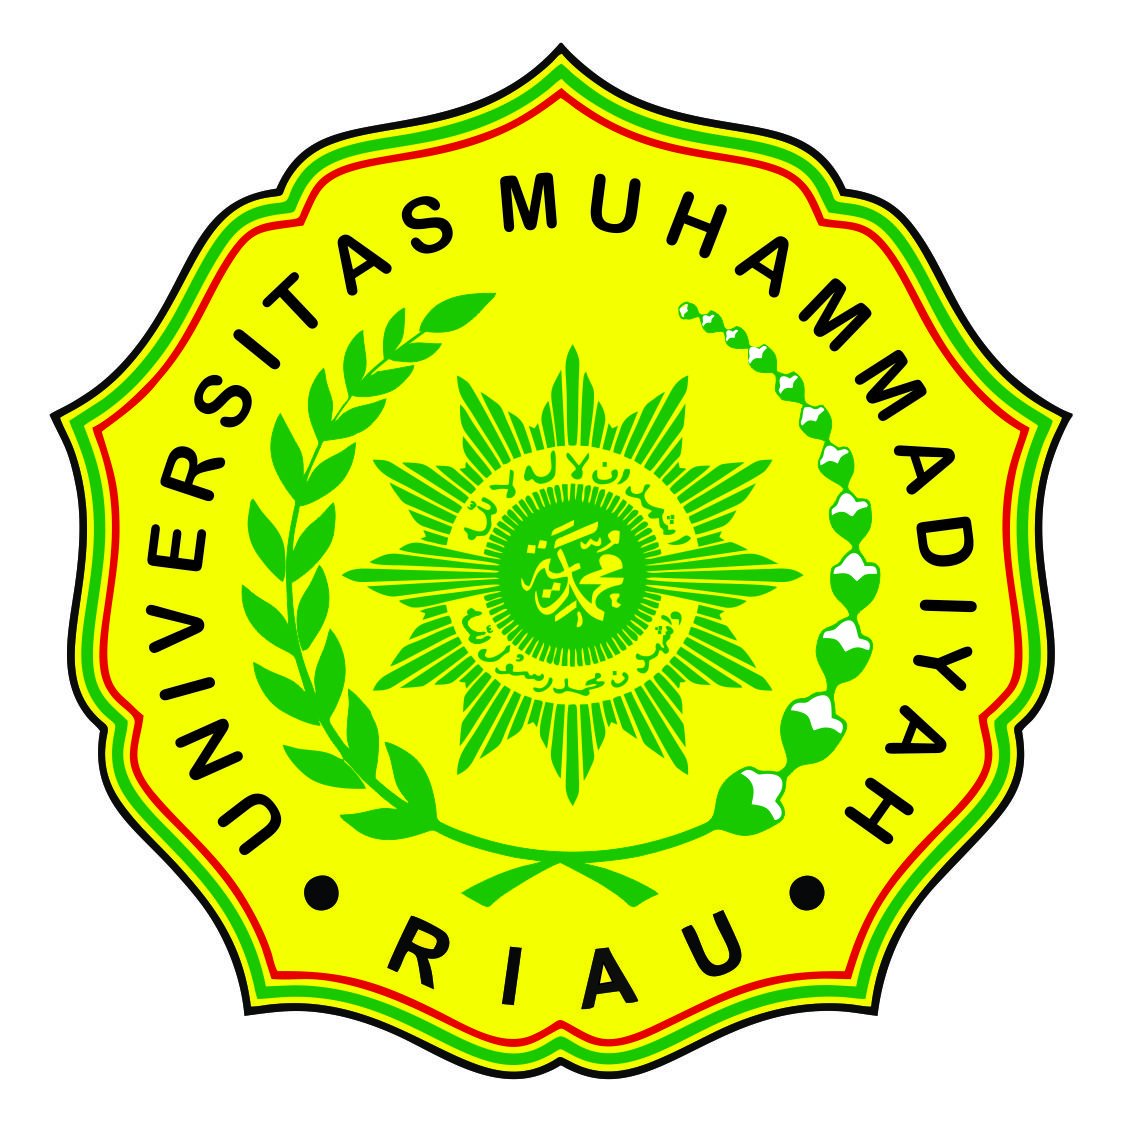 Universitas Muhammadiyah Riau